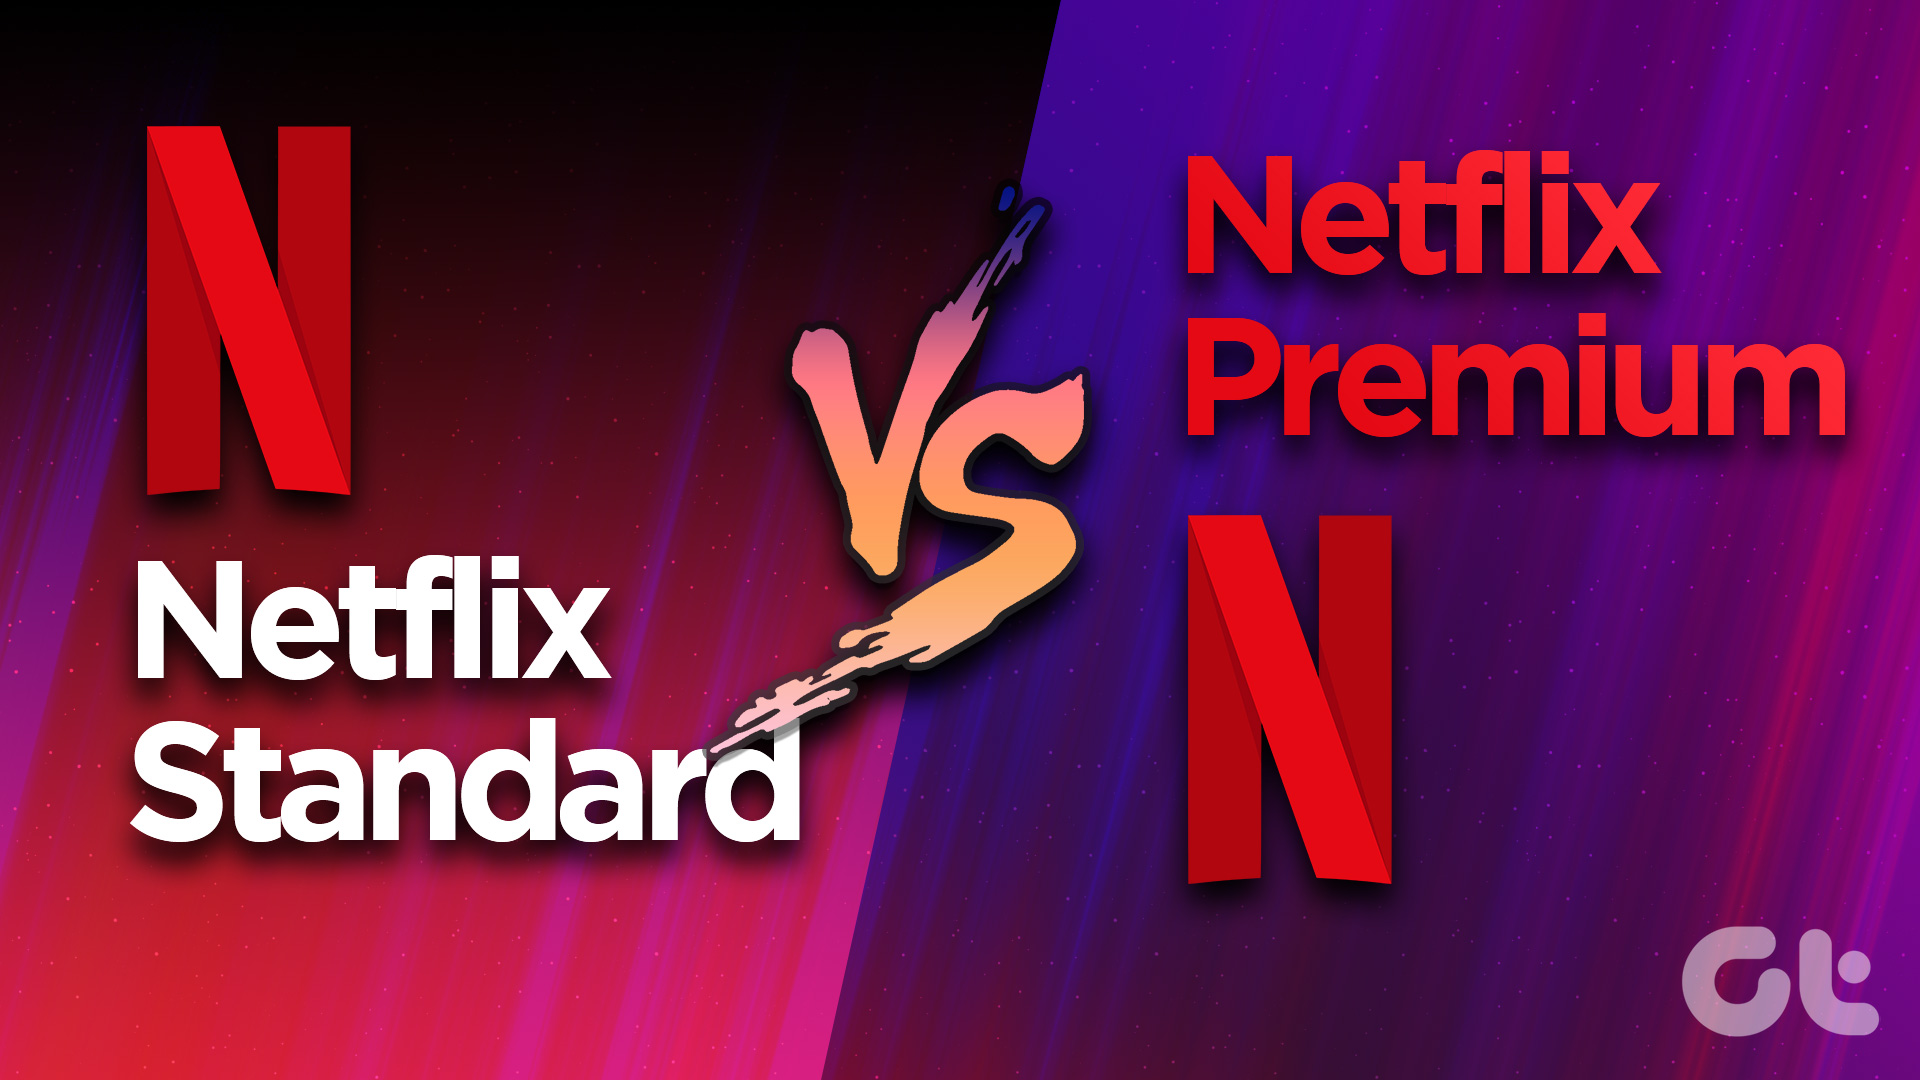 Netflix Standard vs. Netflix Premium